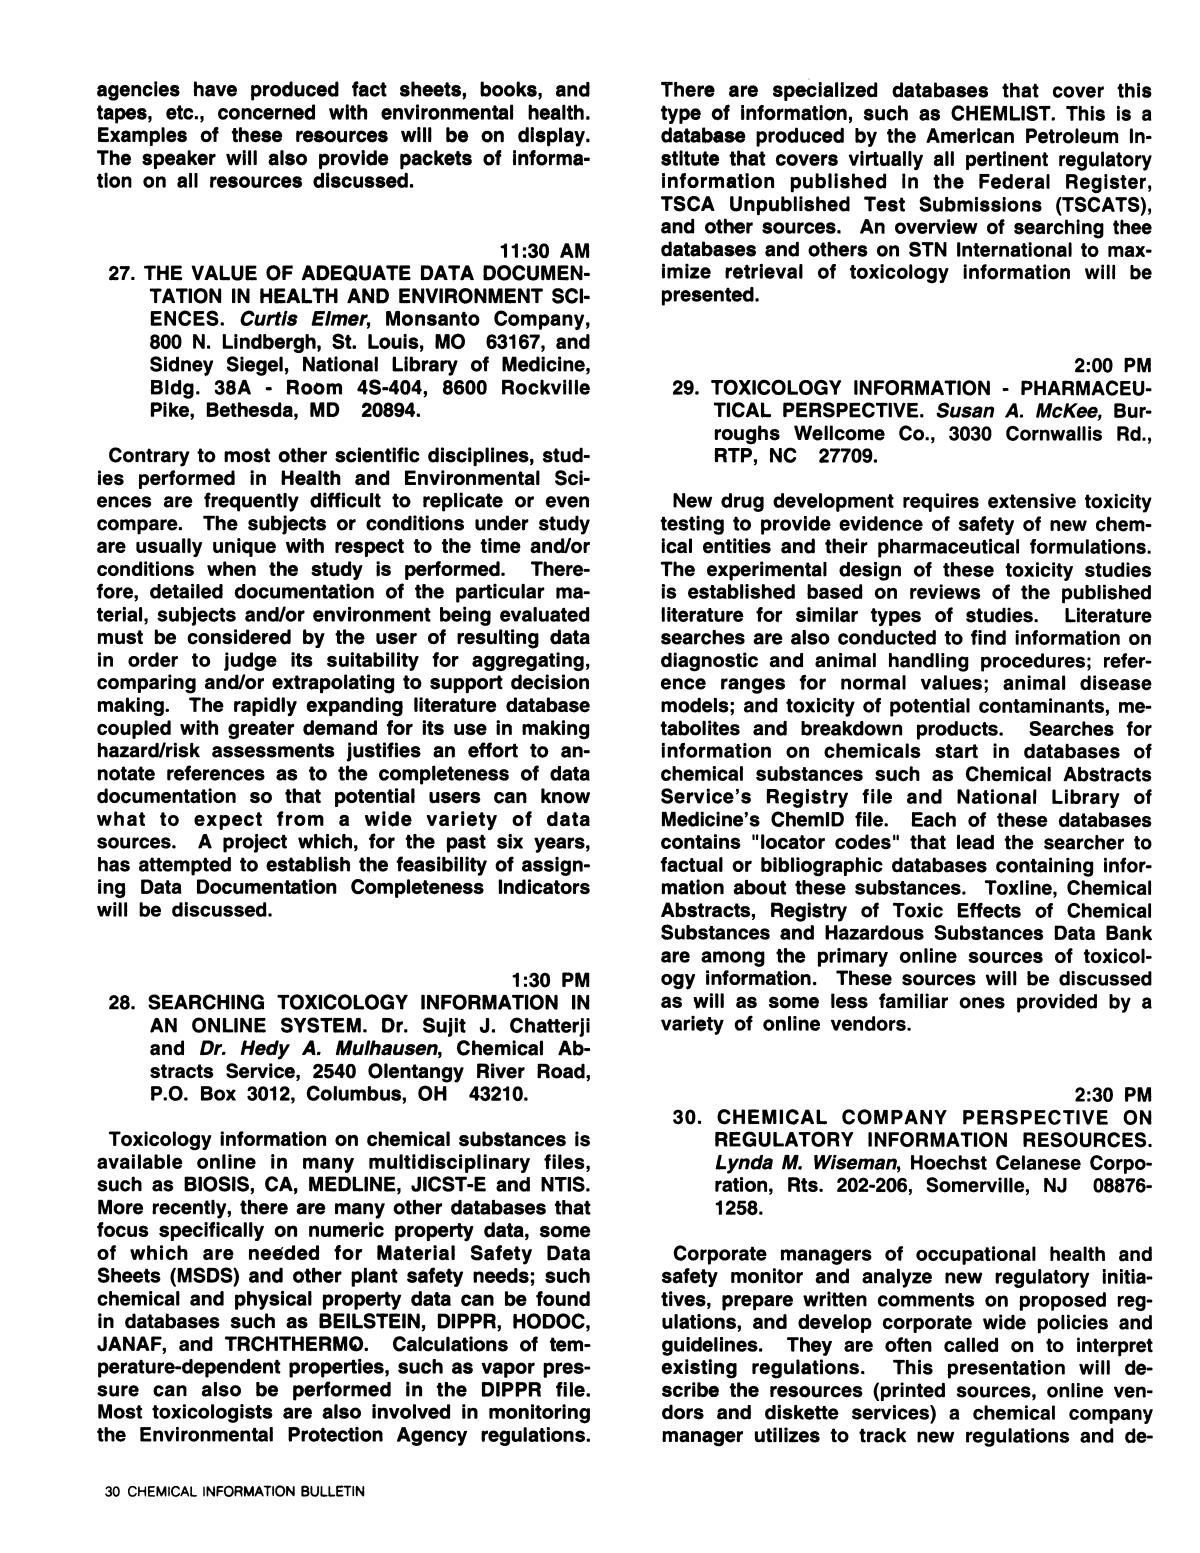 Chemical Information Bulletin, Volume 43, Number 1, Spring 1991
                                                
                                                    30
                                                